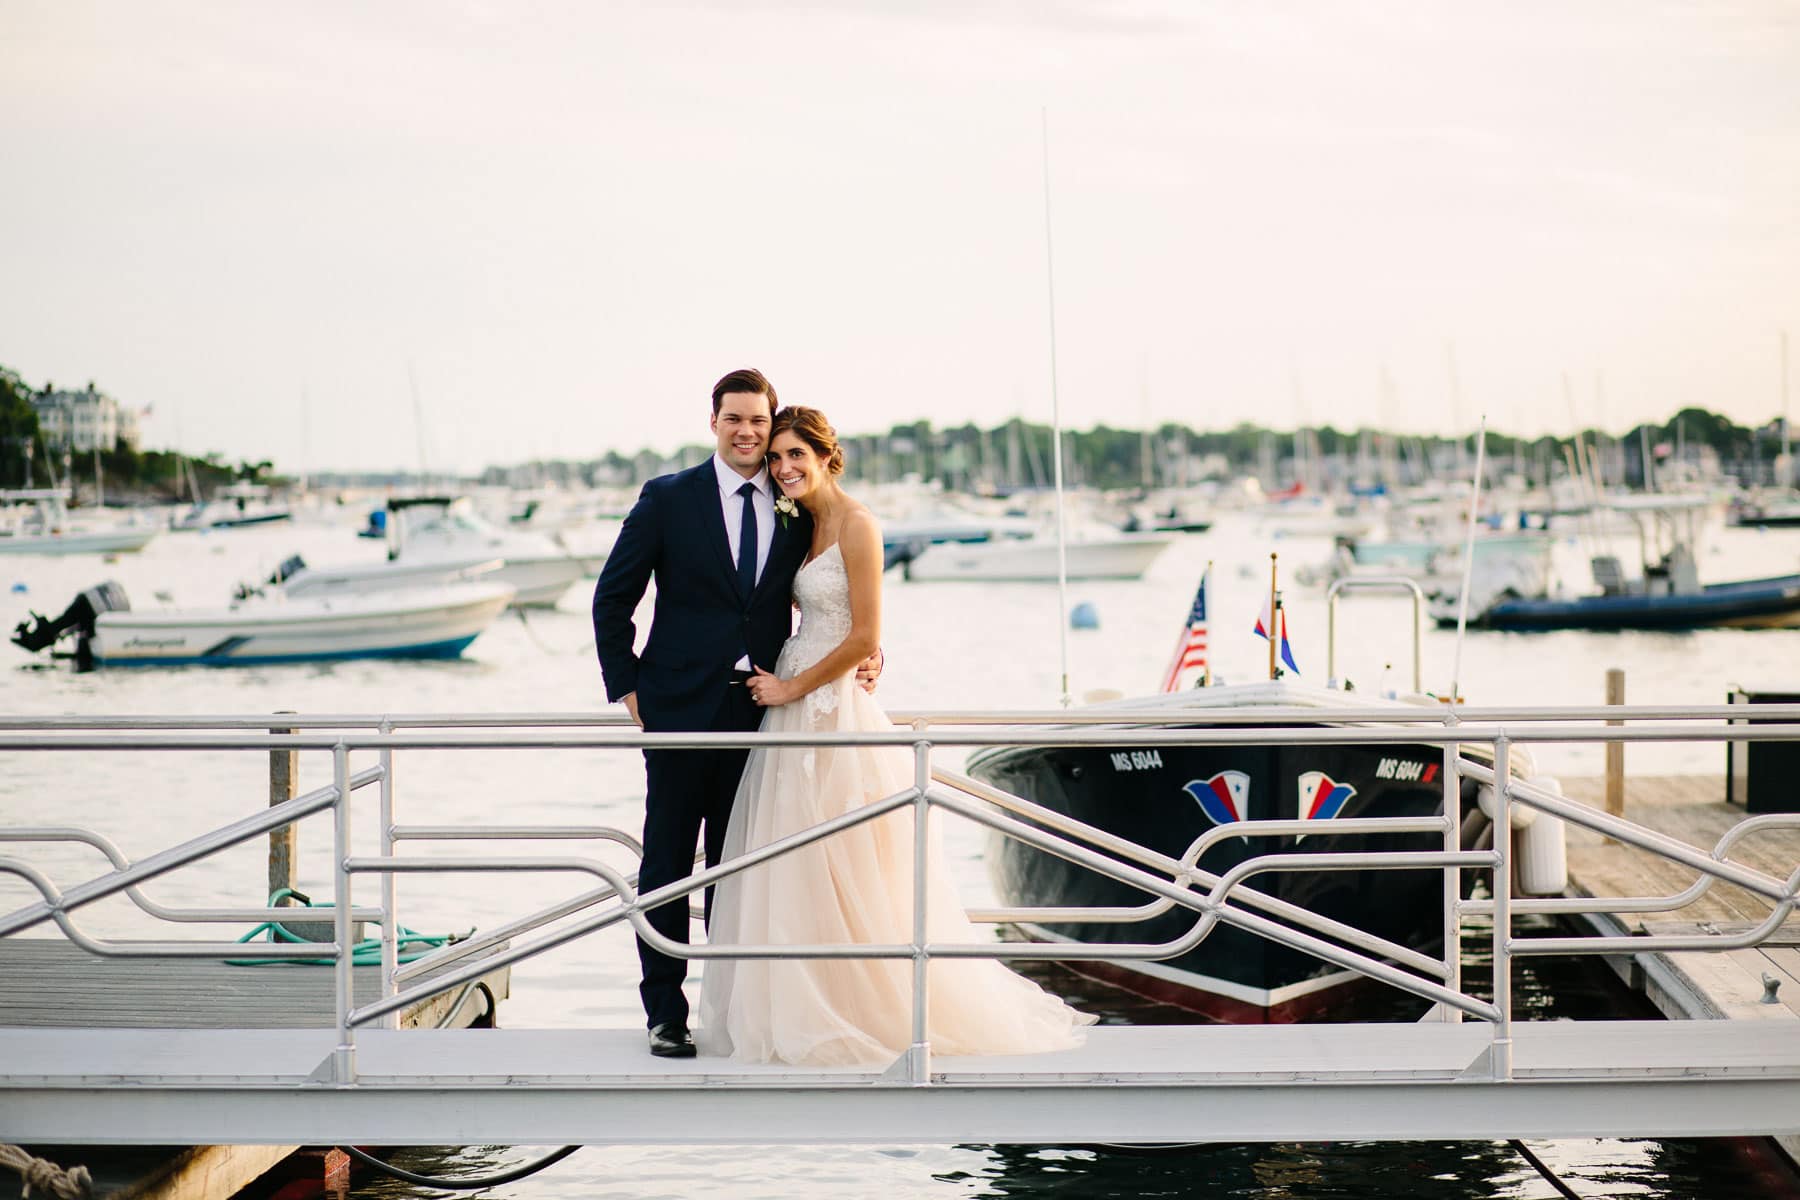 Corinthian Yacht Club wedding of Danielle and Dave, Marblehead, MA | Kelly Benvenuto Photography | Boston Wedding Photographer